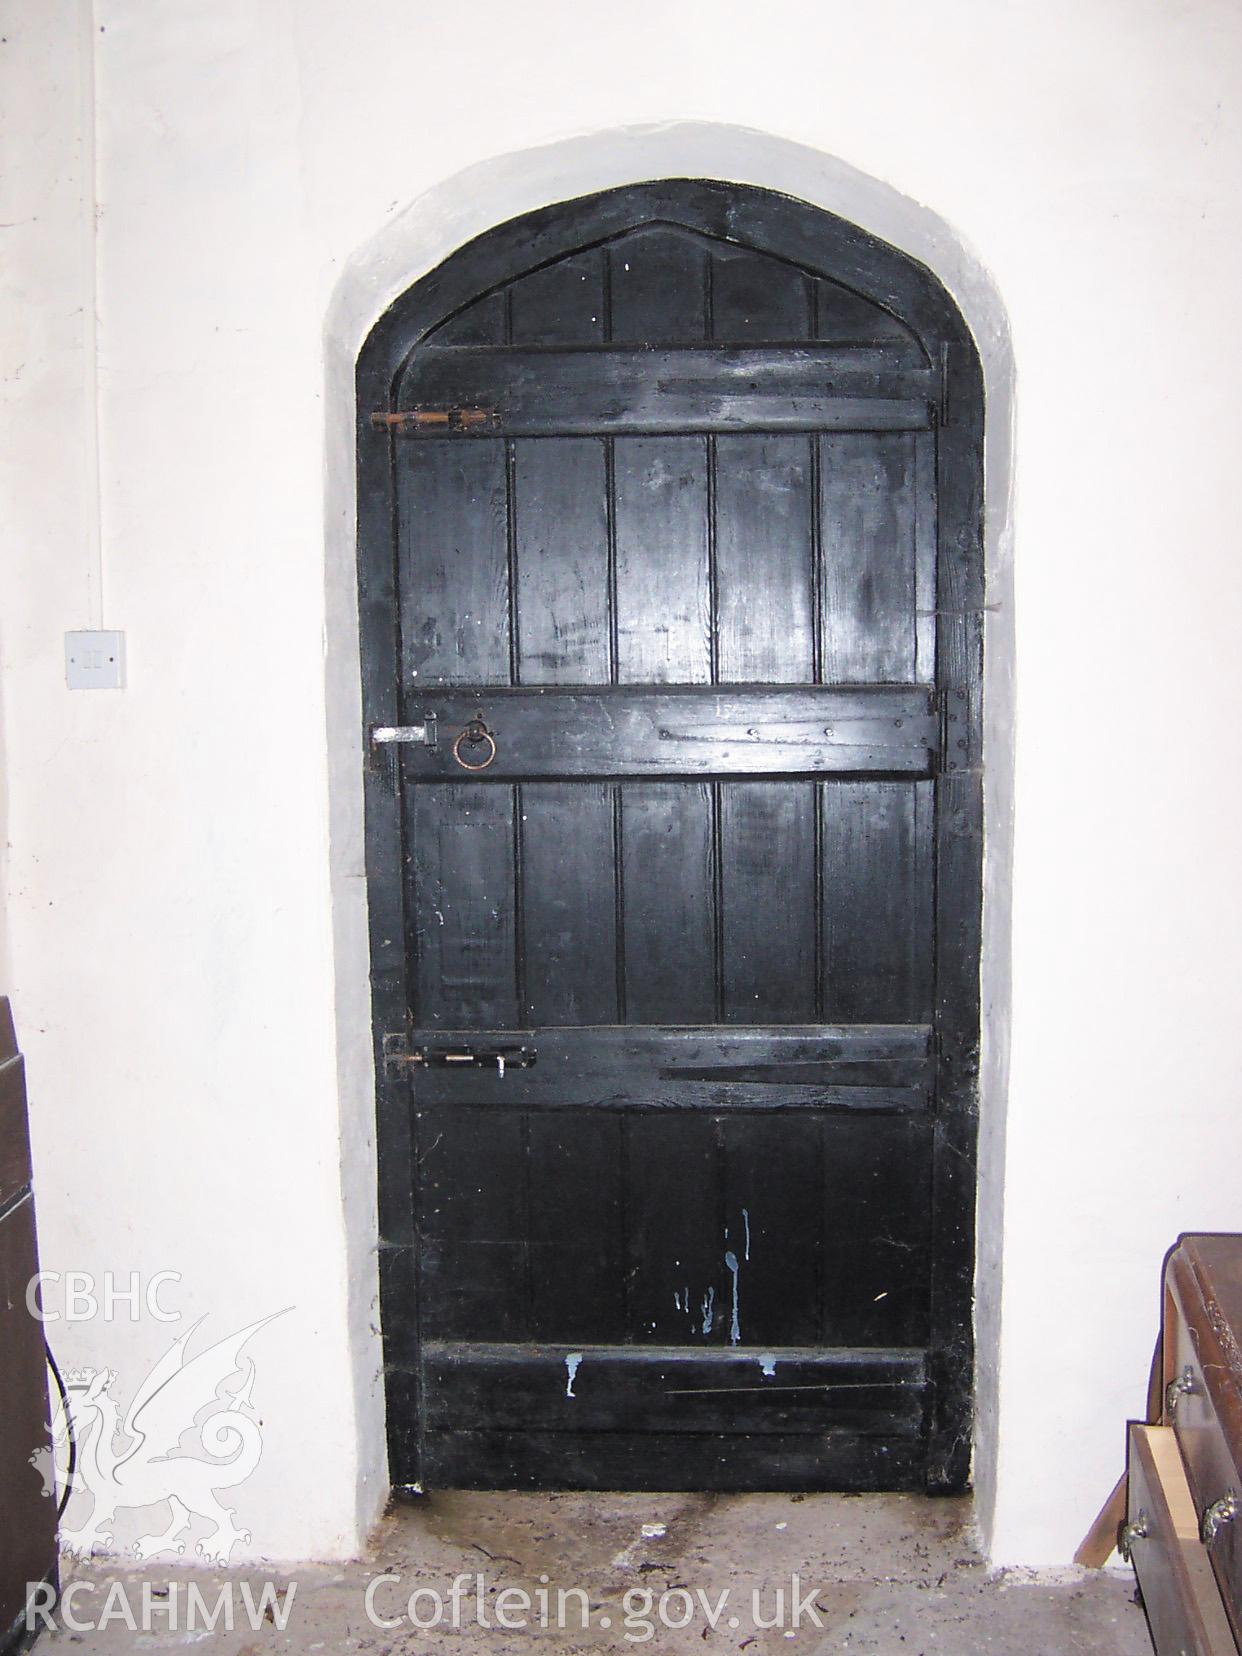 Colour digital photograph of the former school room door.